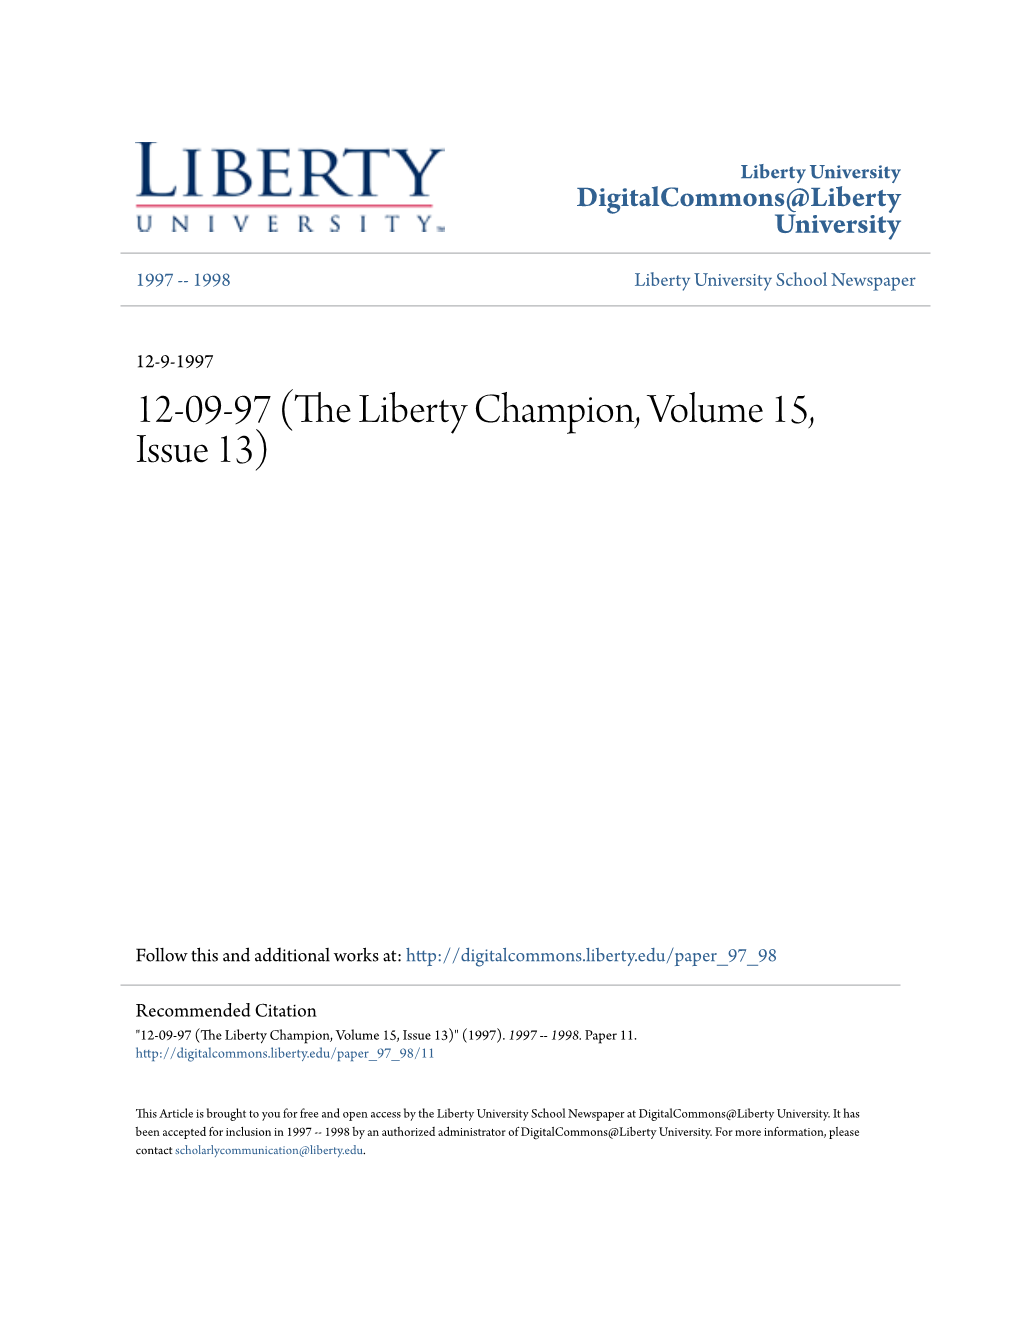 12-09-97 (The Liberty Champion, Volume 15, Issue 13)